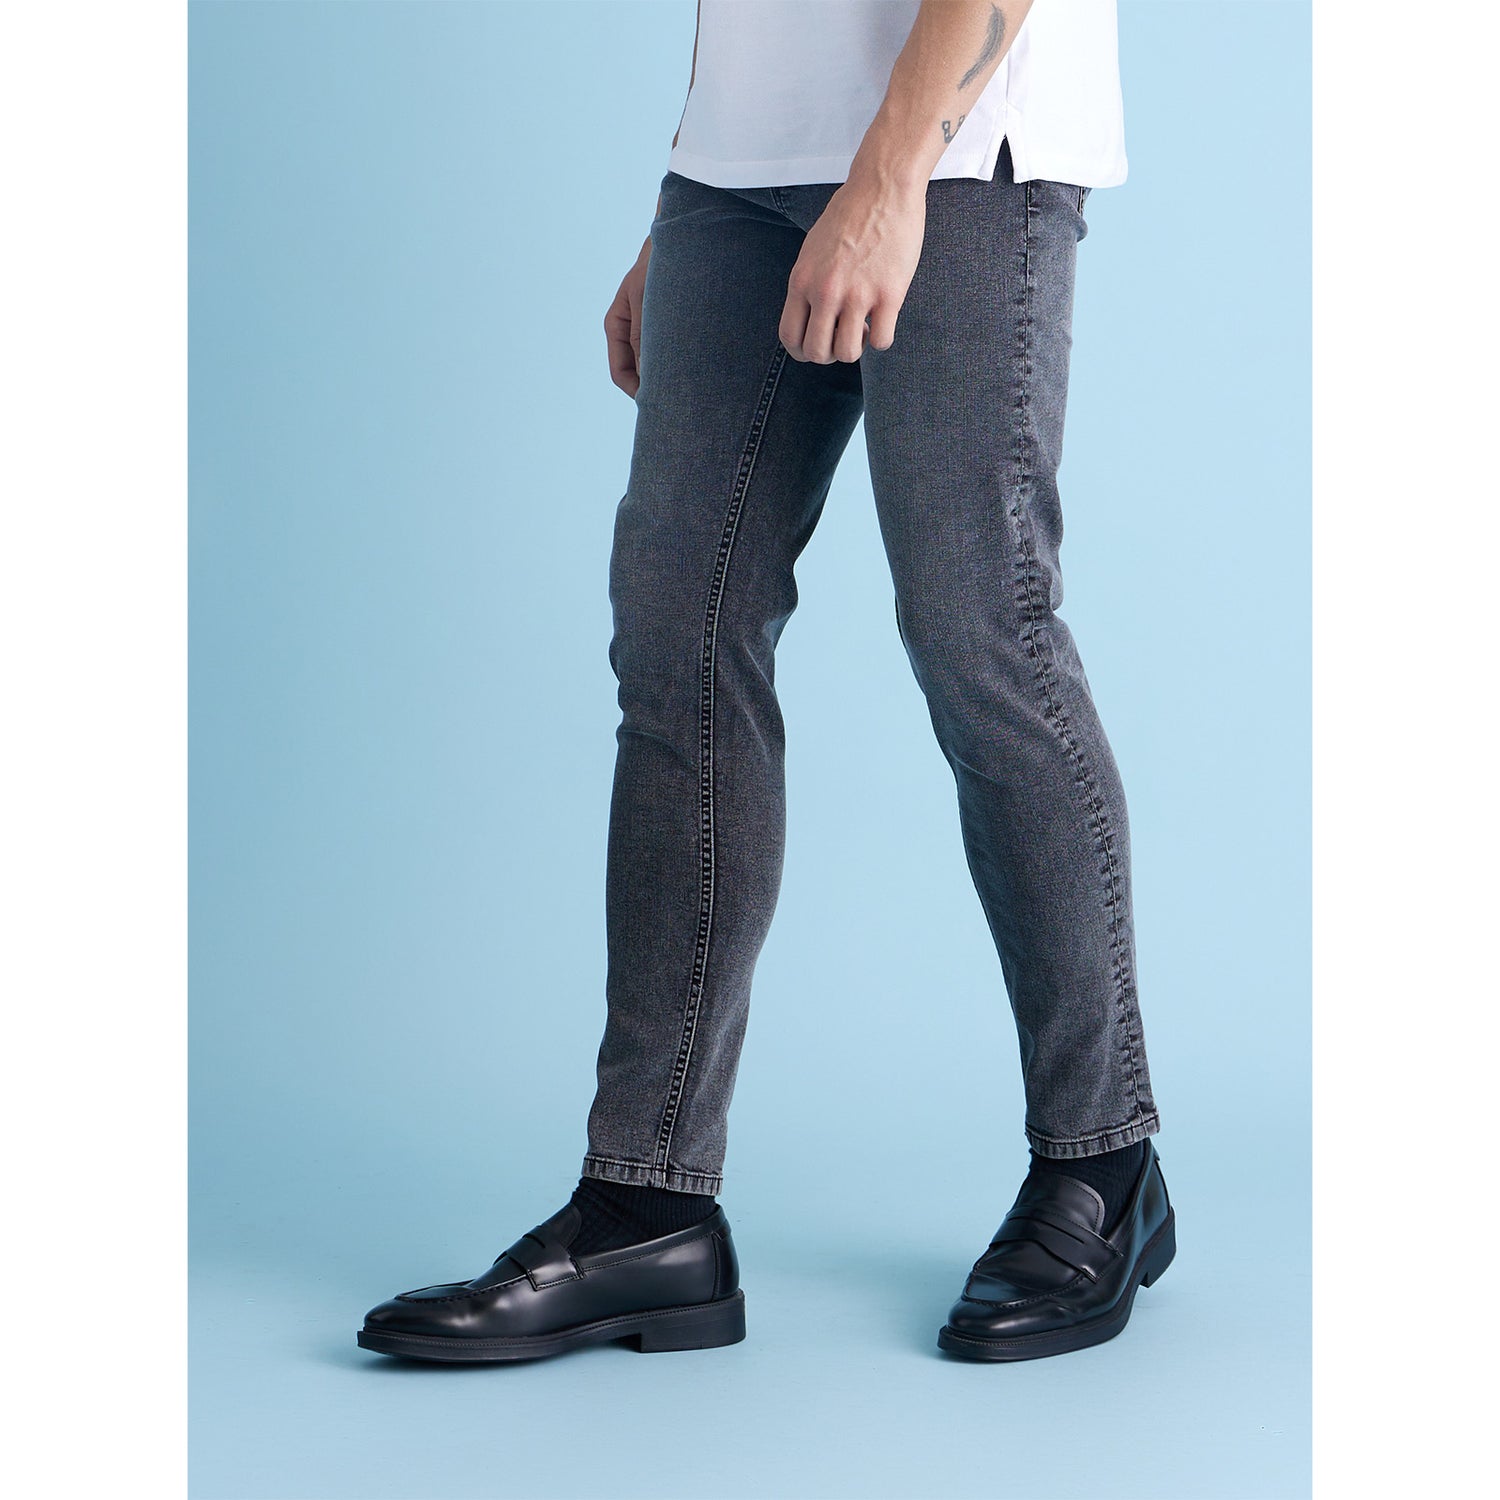 Grey Boyfriend Fit Light Fade Stretchable Cotton Jeans (DOSLEYIN25)